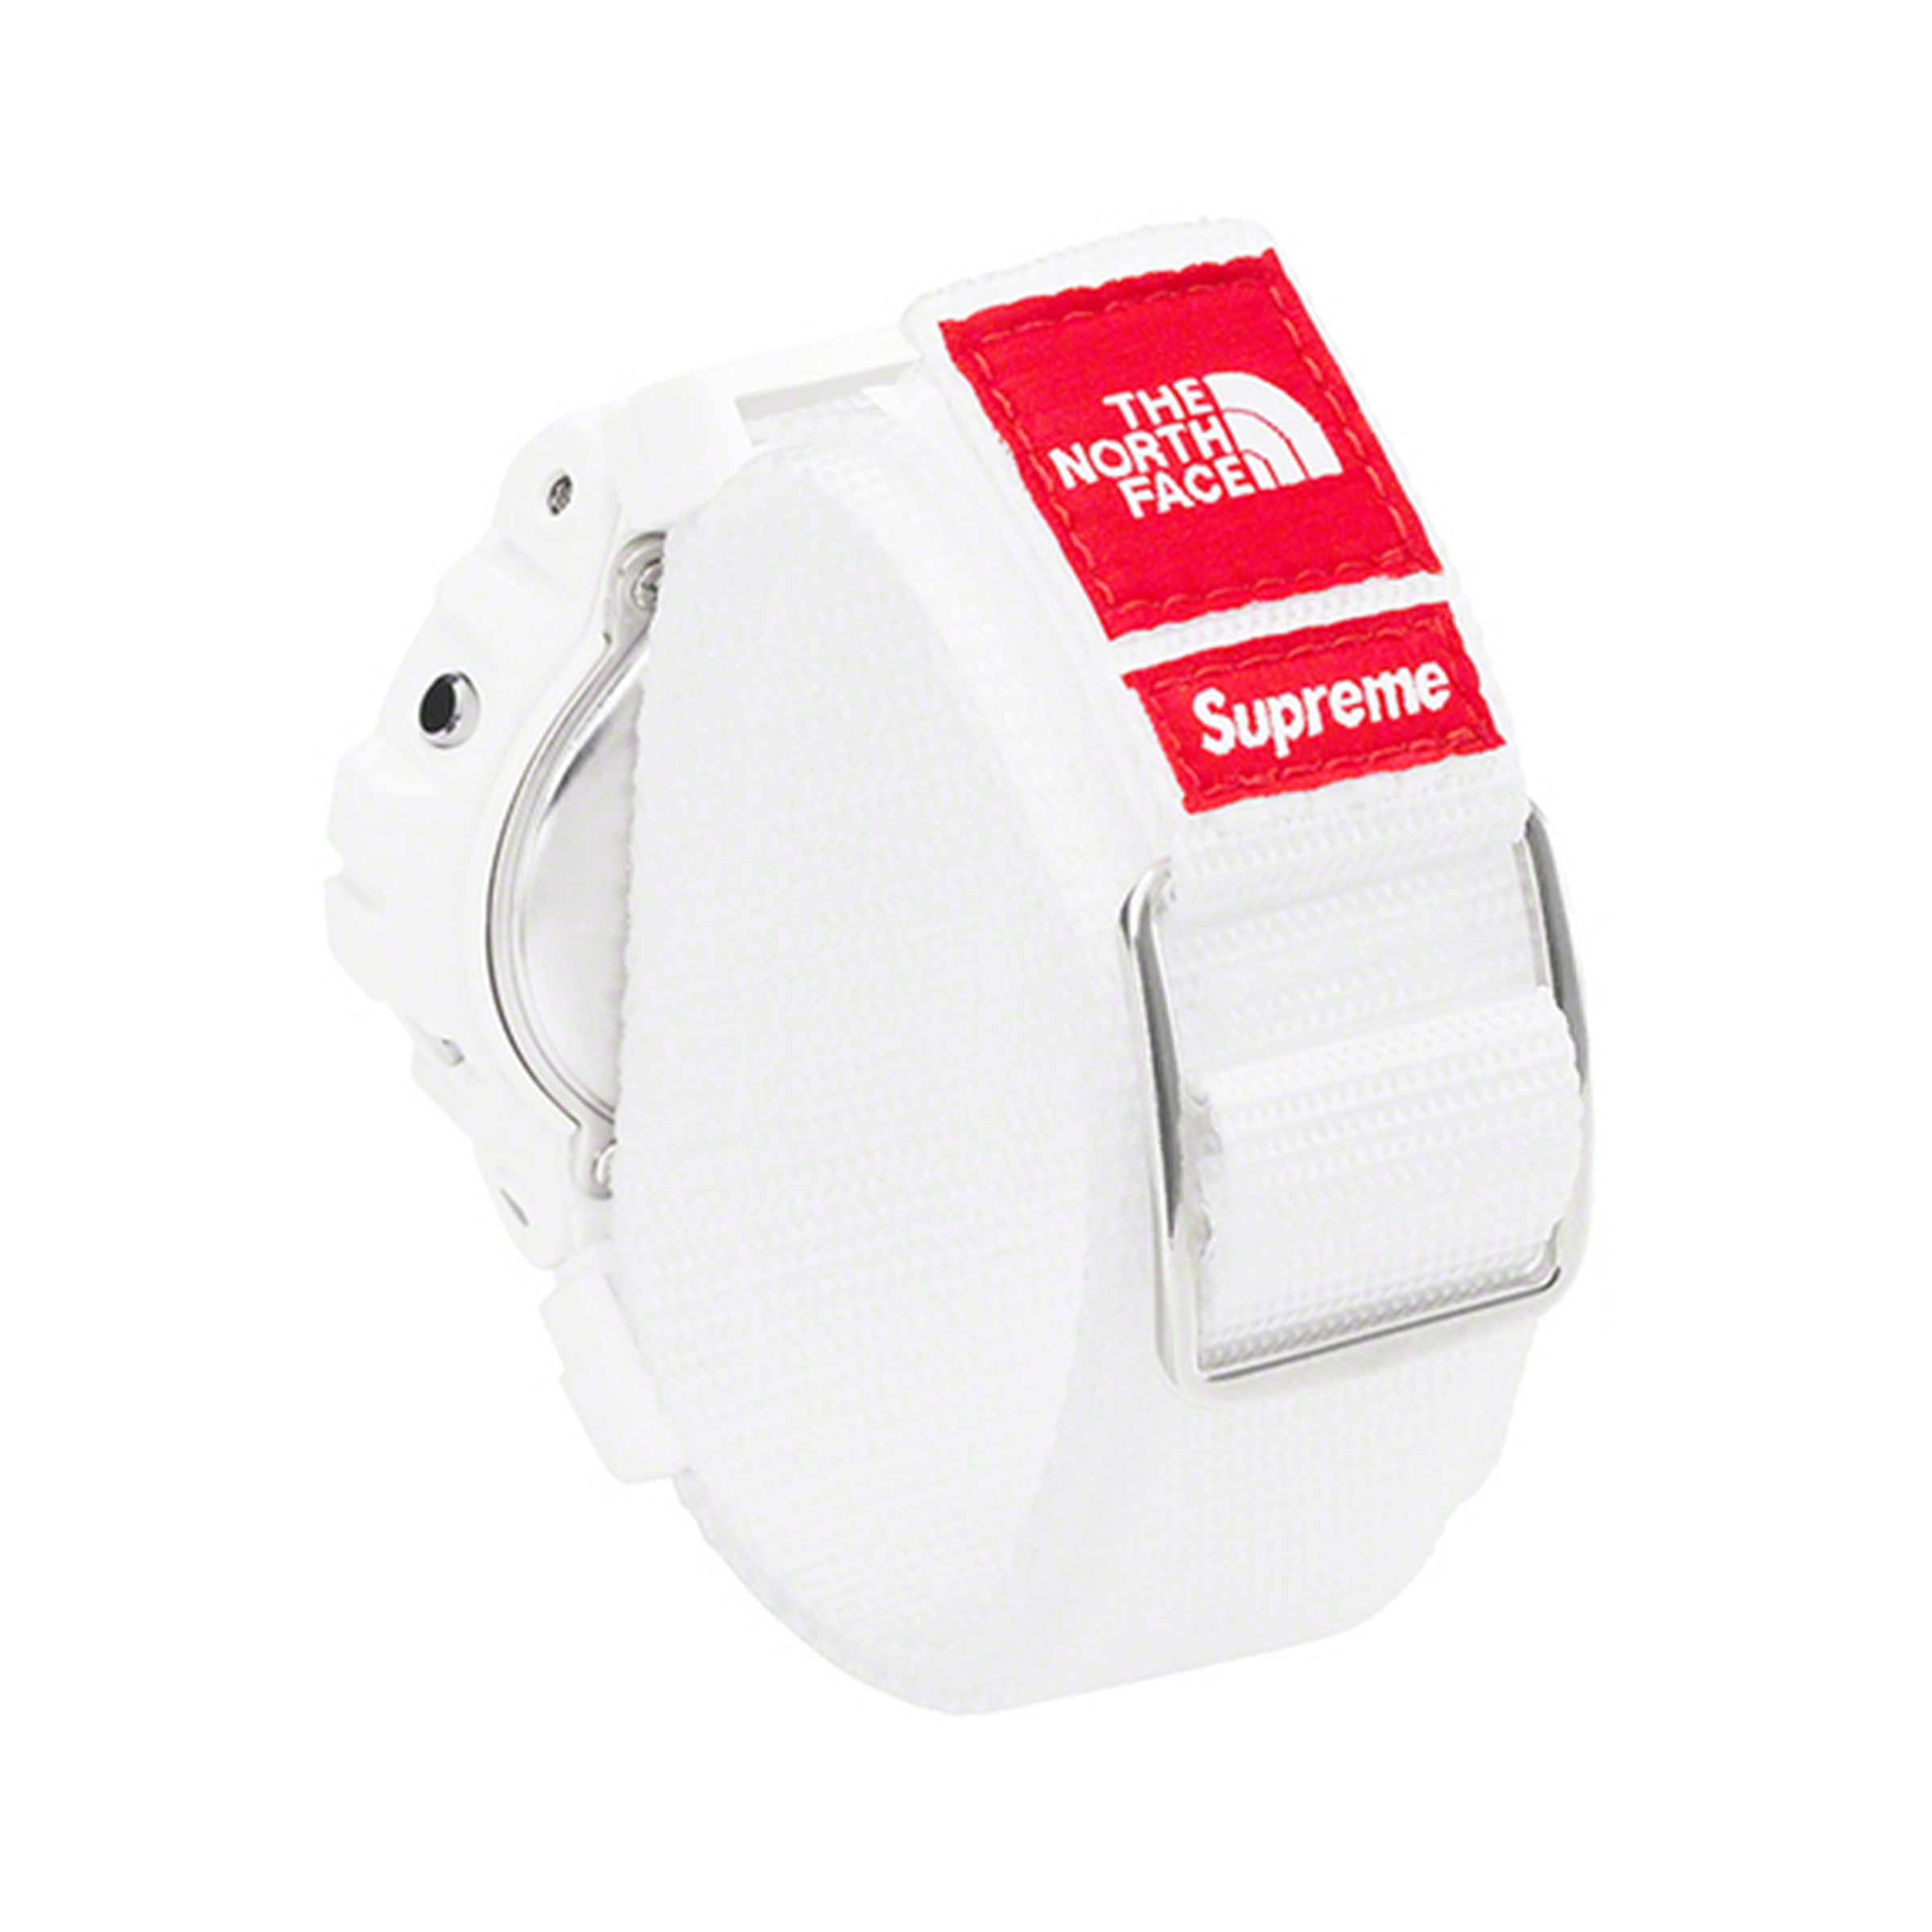 Supreme x The North Face x G Shock - Wrist Watch